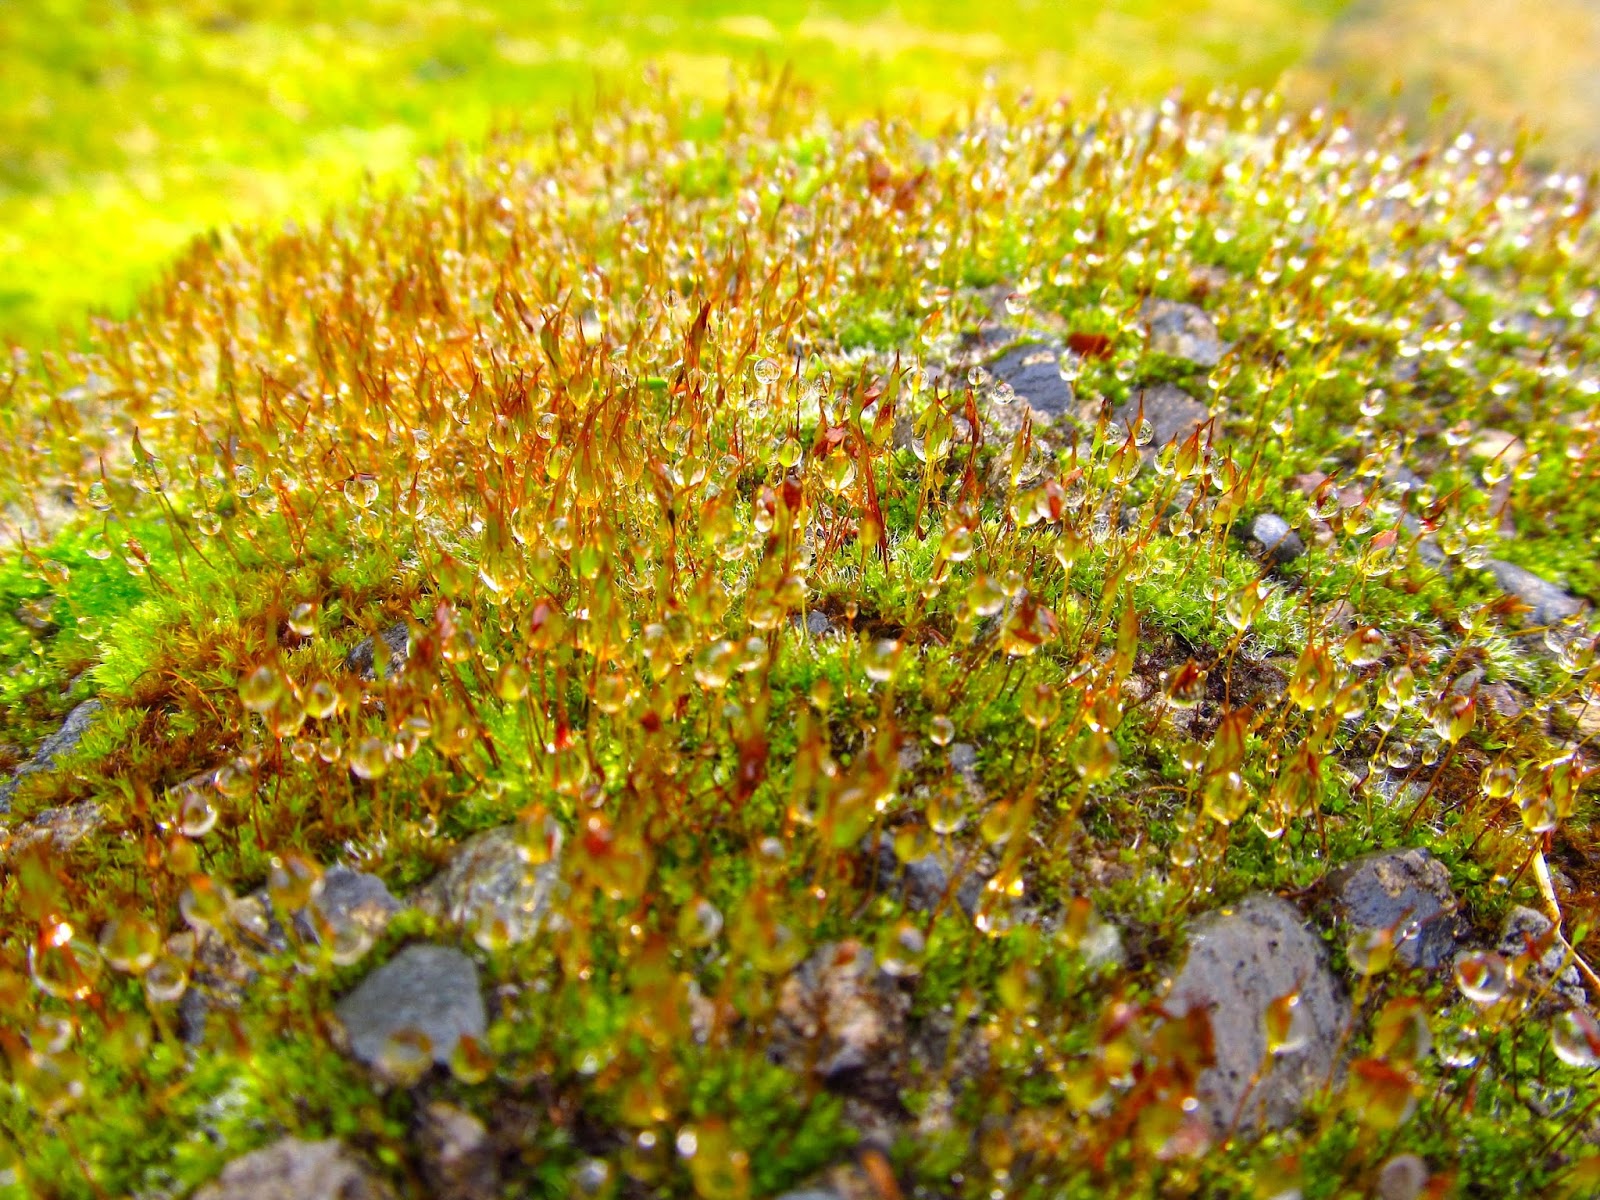 Welsh Sphagnum Moss